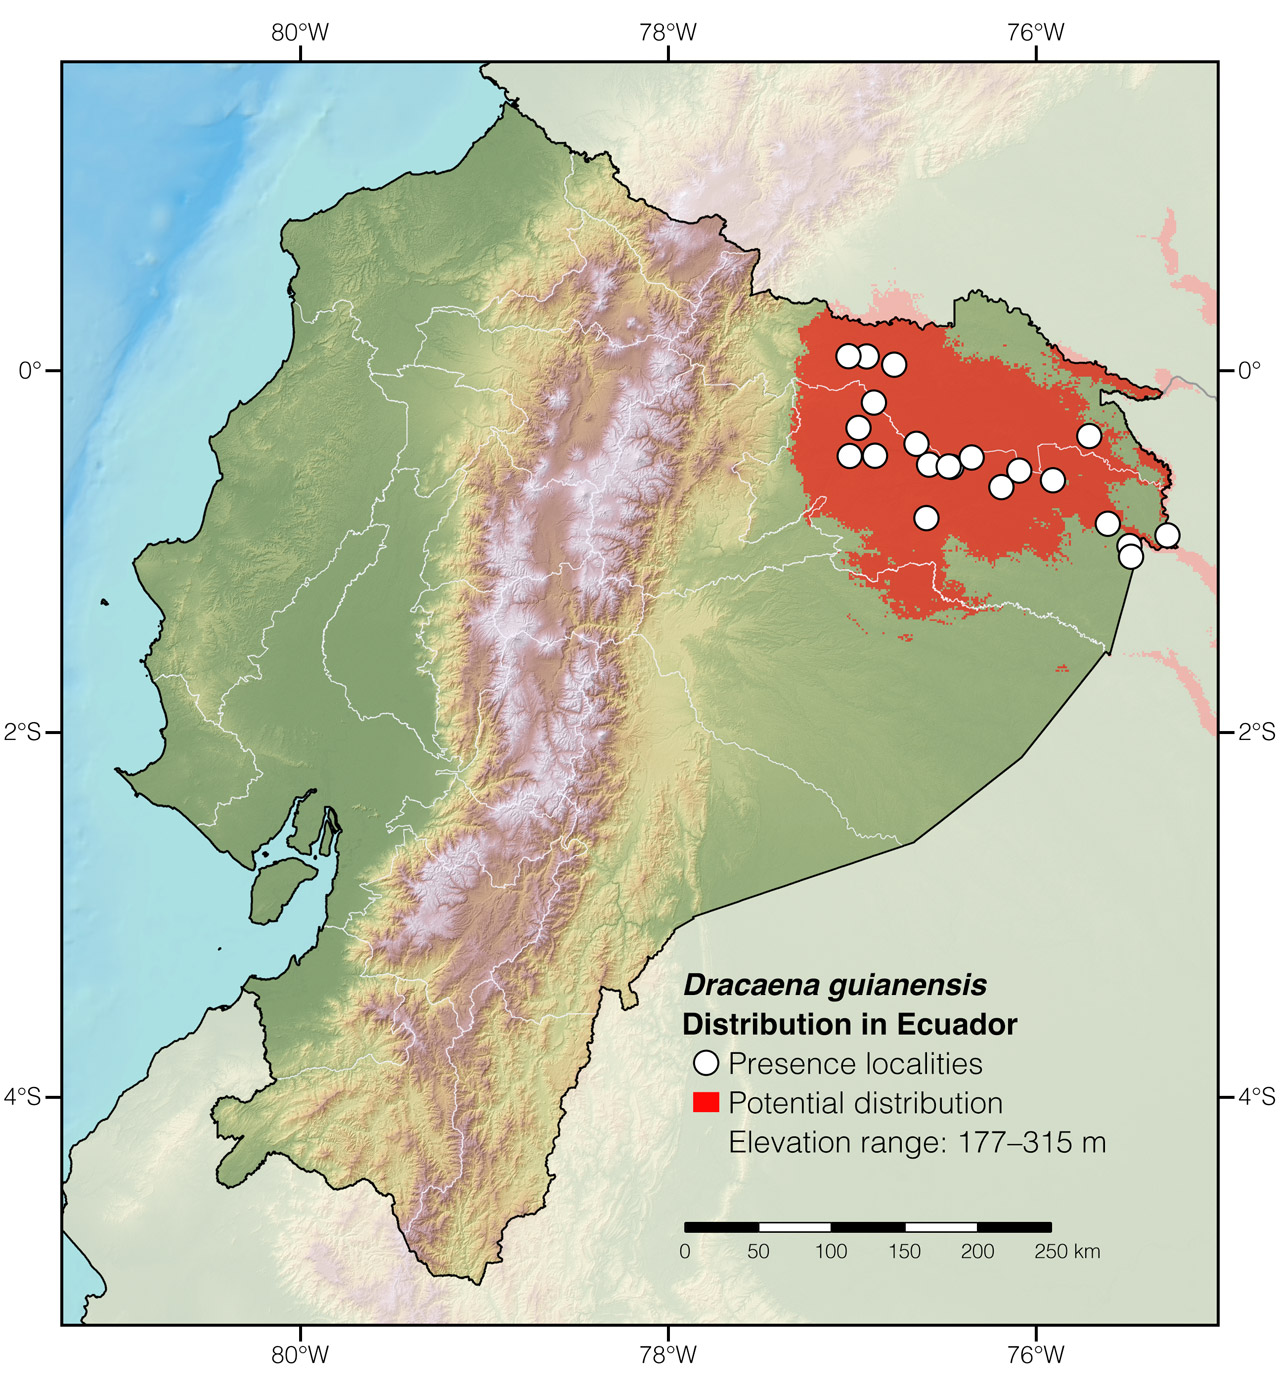 Distribution of Dracaena guianensis in Ecuador